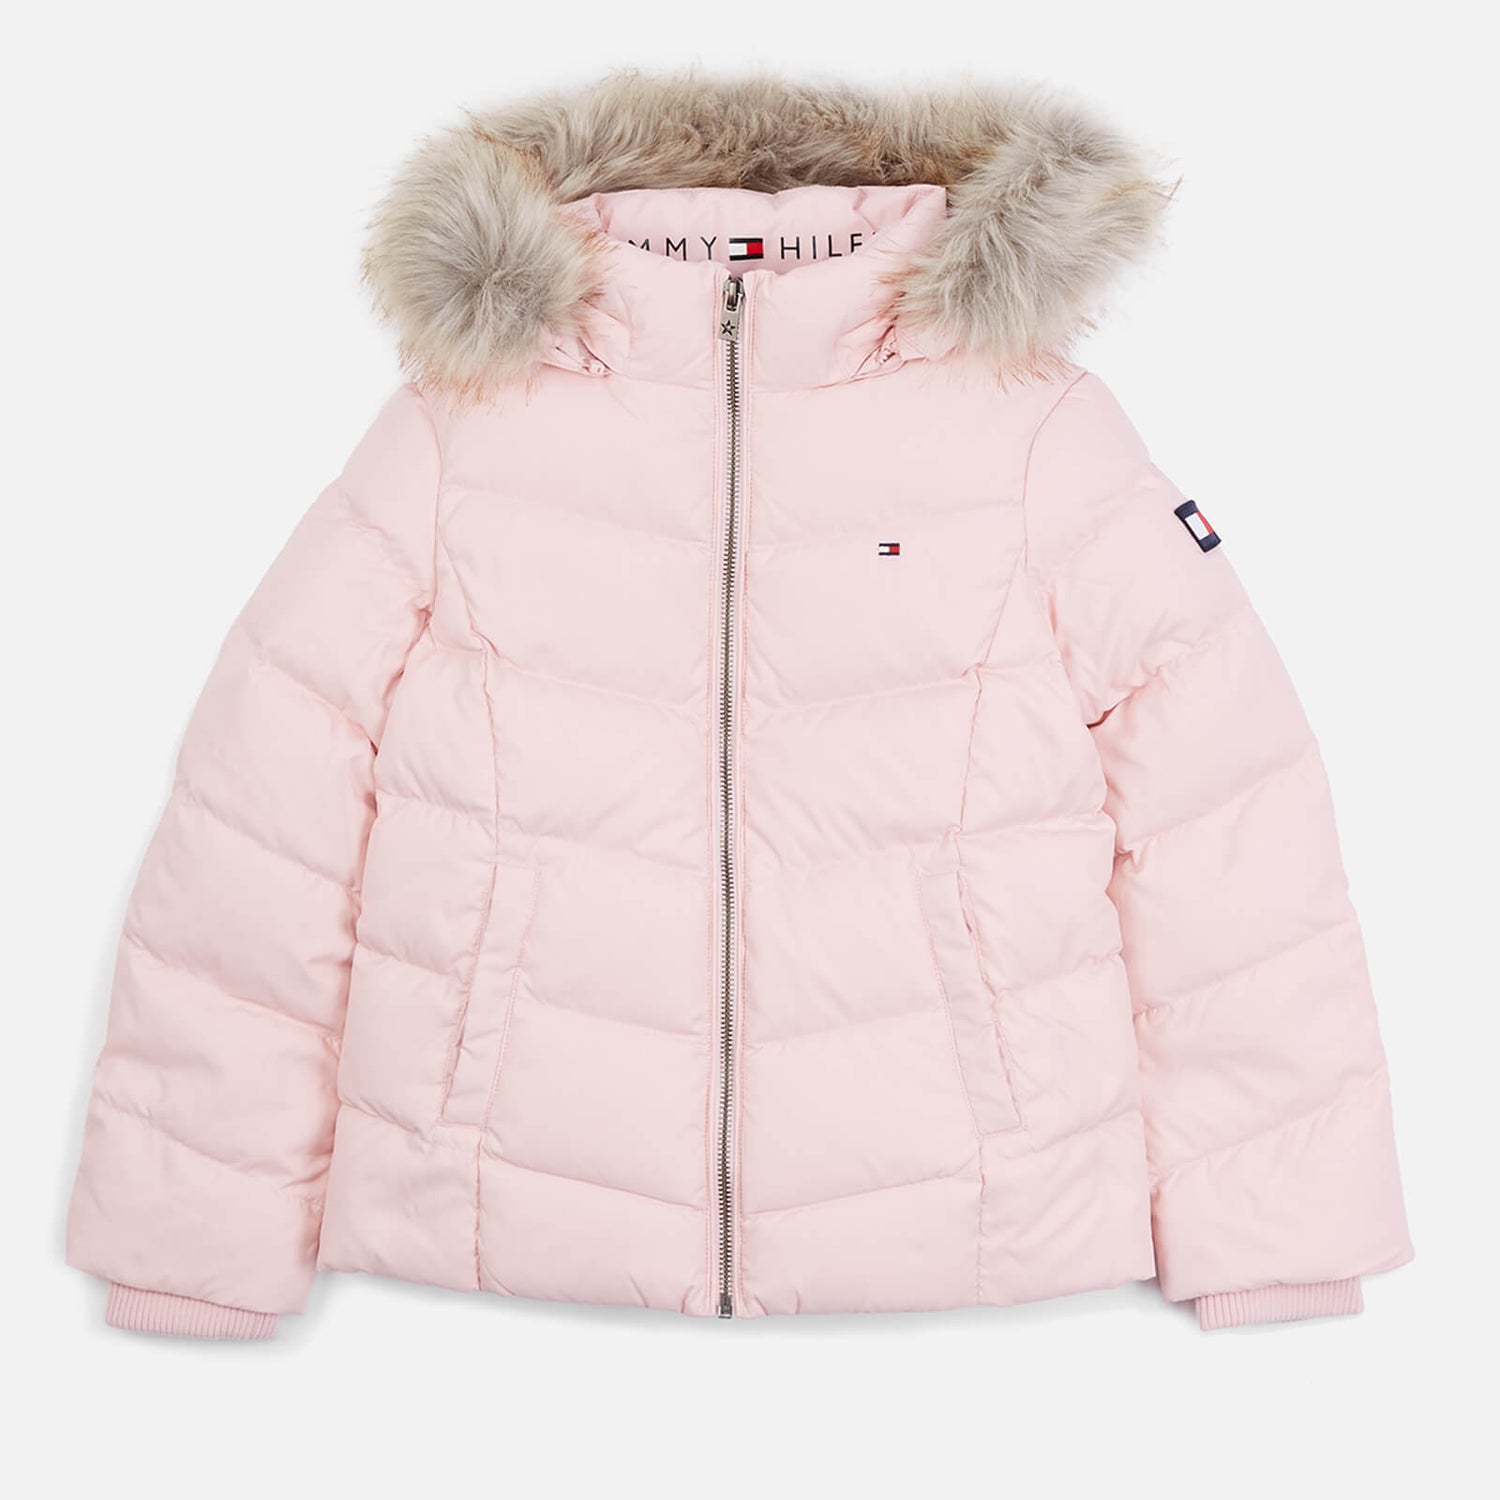 Tommy Hilfiger Girls' Essential Down Jacket - Delicate Pink